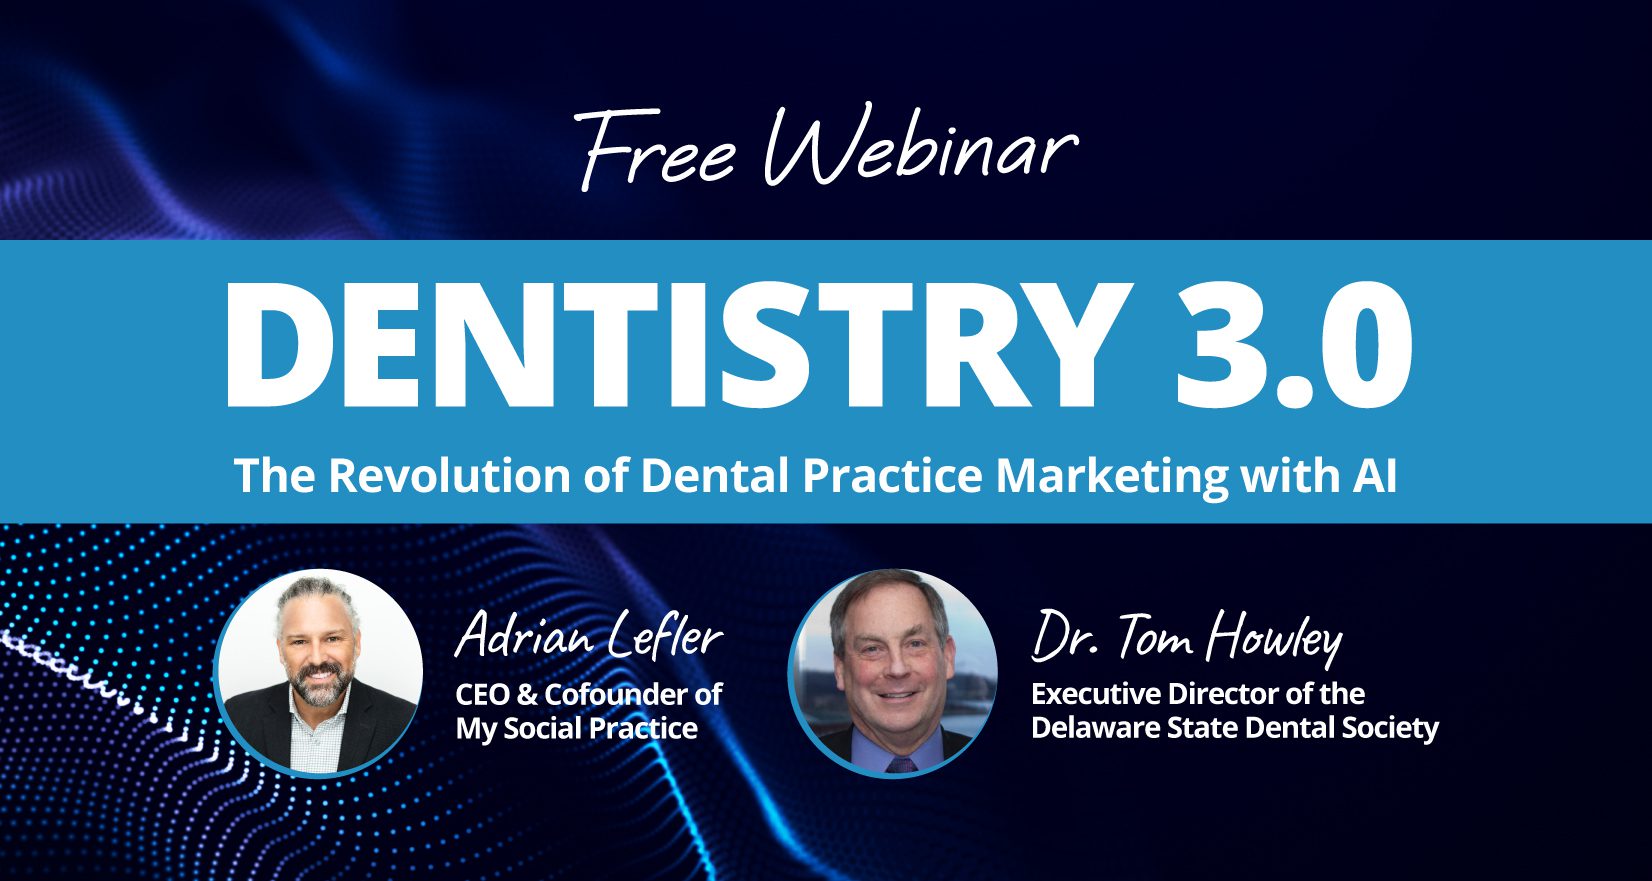 My Social Practice - Social Media Marketing for Dental & Dental Specialty Practices - endodontist reputation management